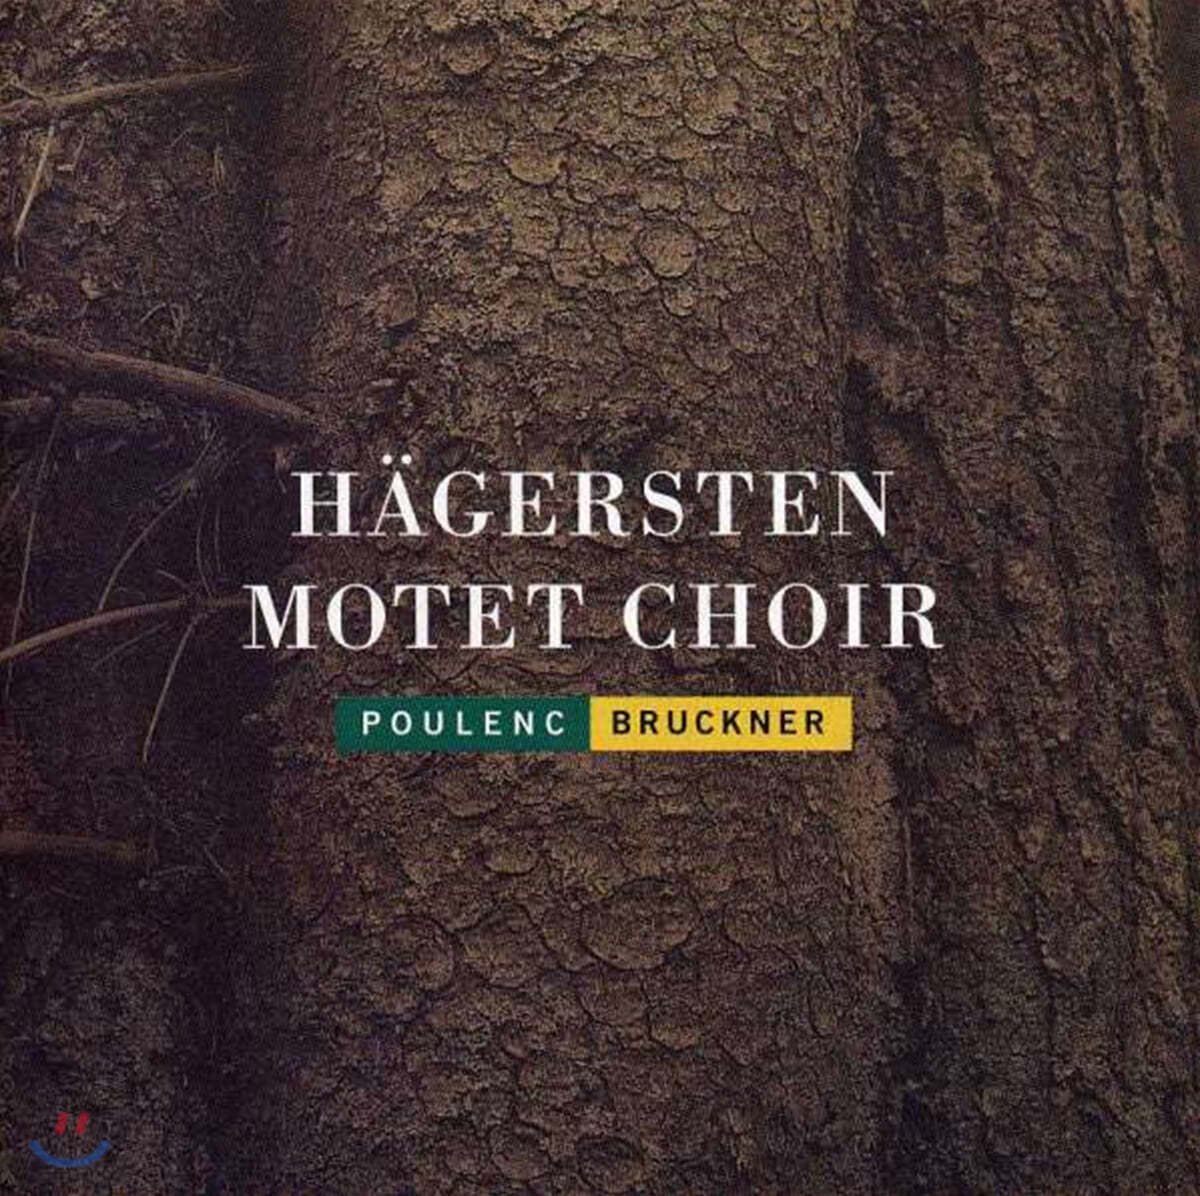 Hagersten Motet Choir 풀랑크 / 브루크너: 합창곡 (Poulenc / Bruckner: Choral Works)